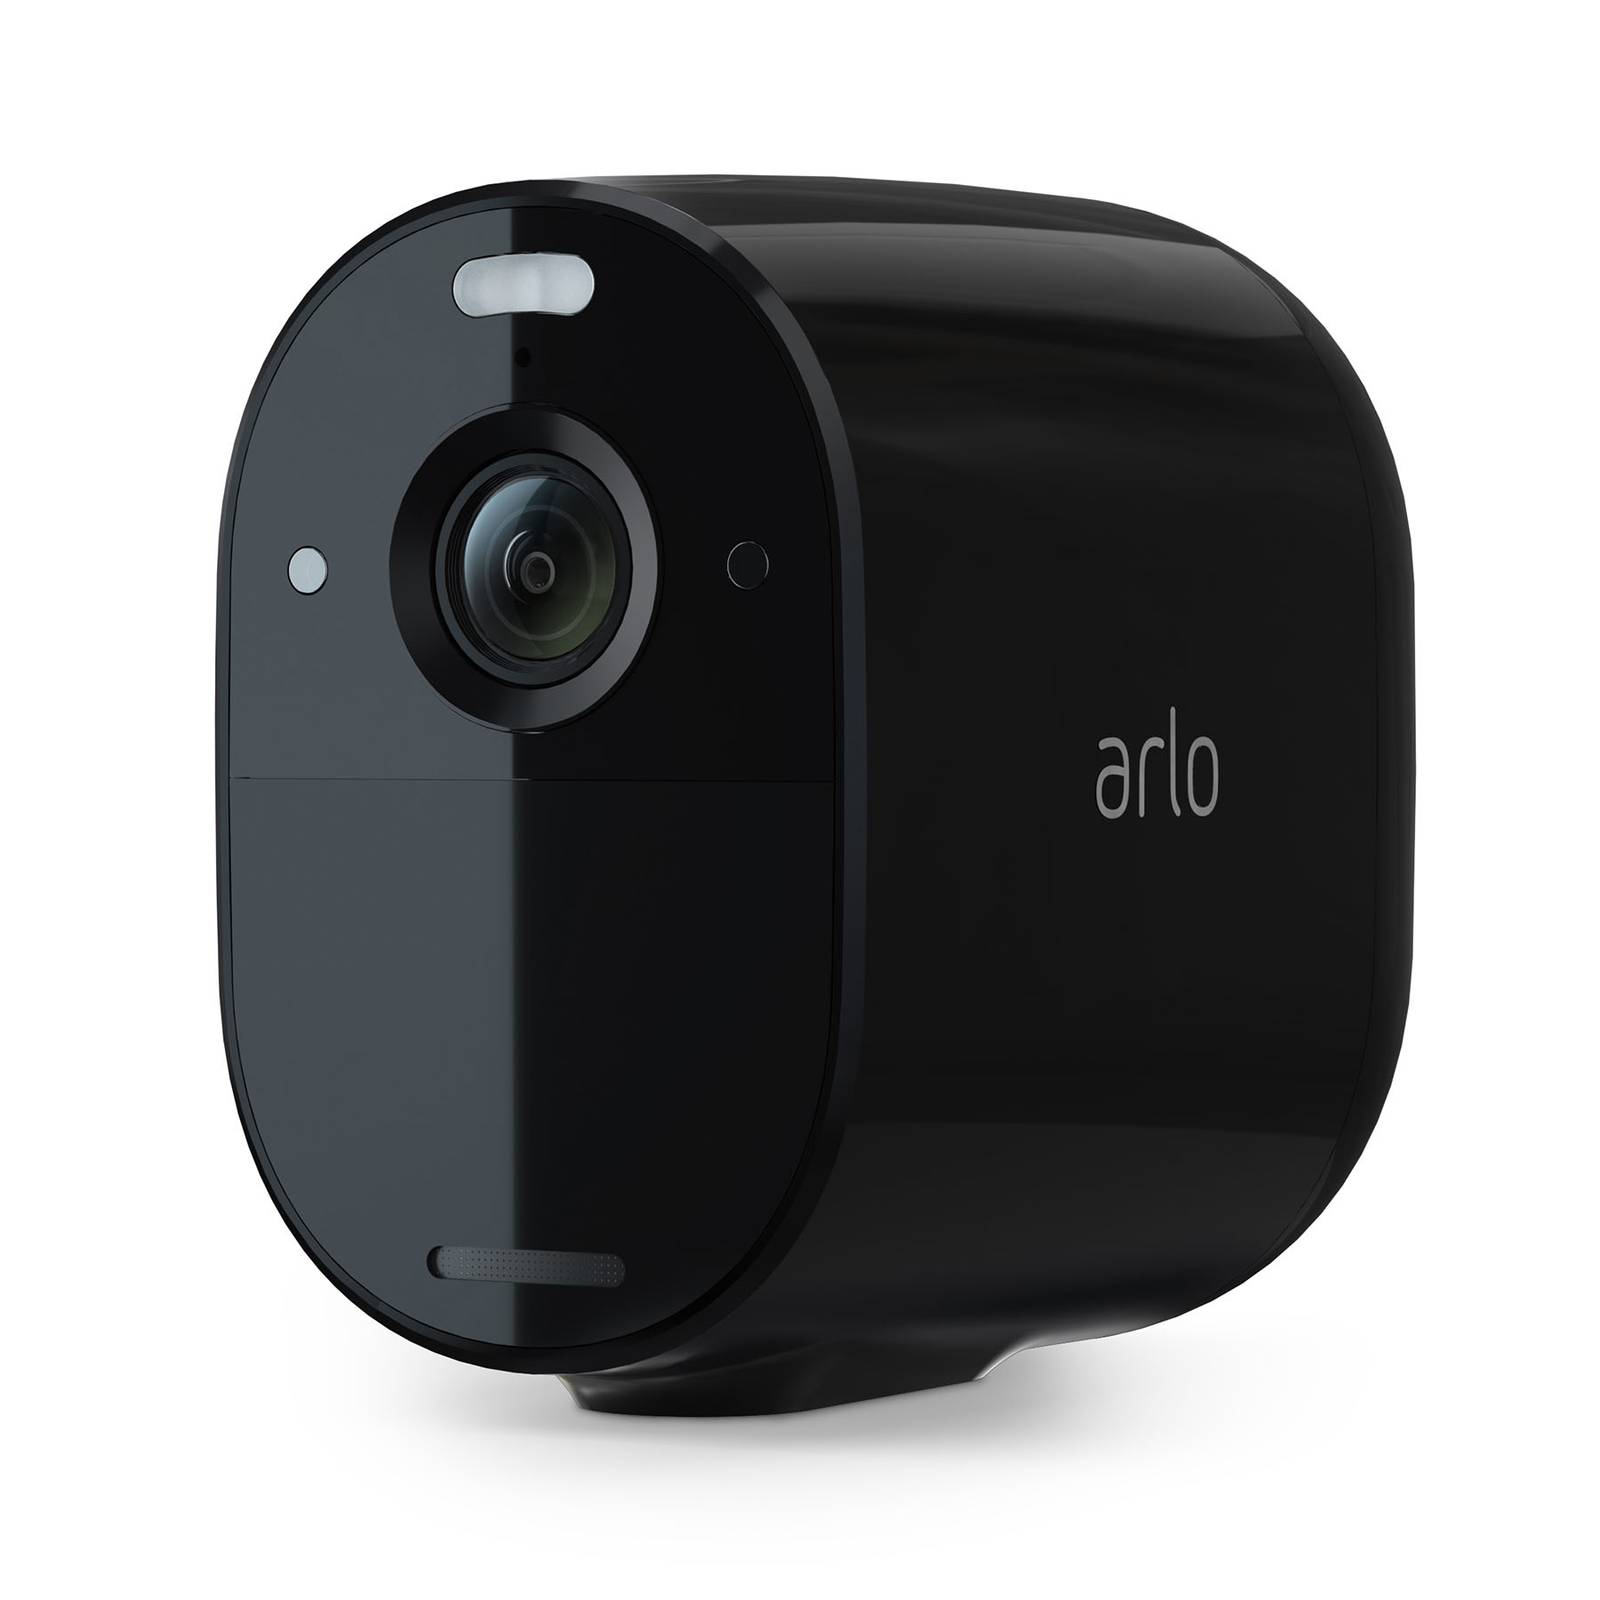 Image of Arlo Essential caméra de surveillance, noire 